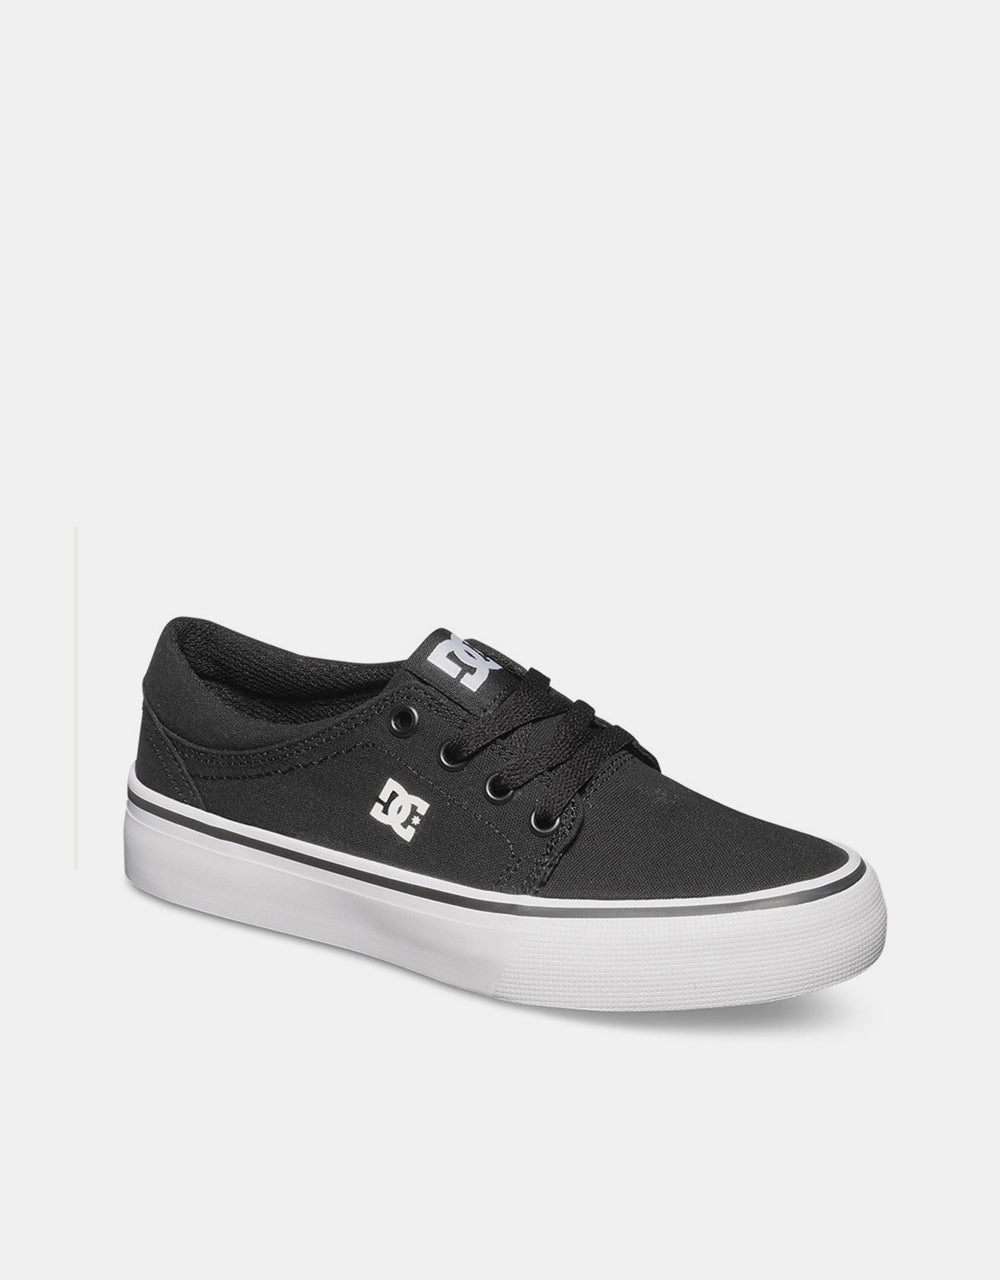 DC Trase Kids Skate Shoes - Black/White